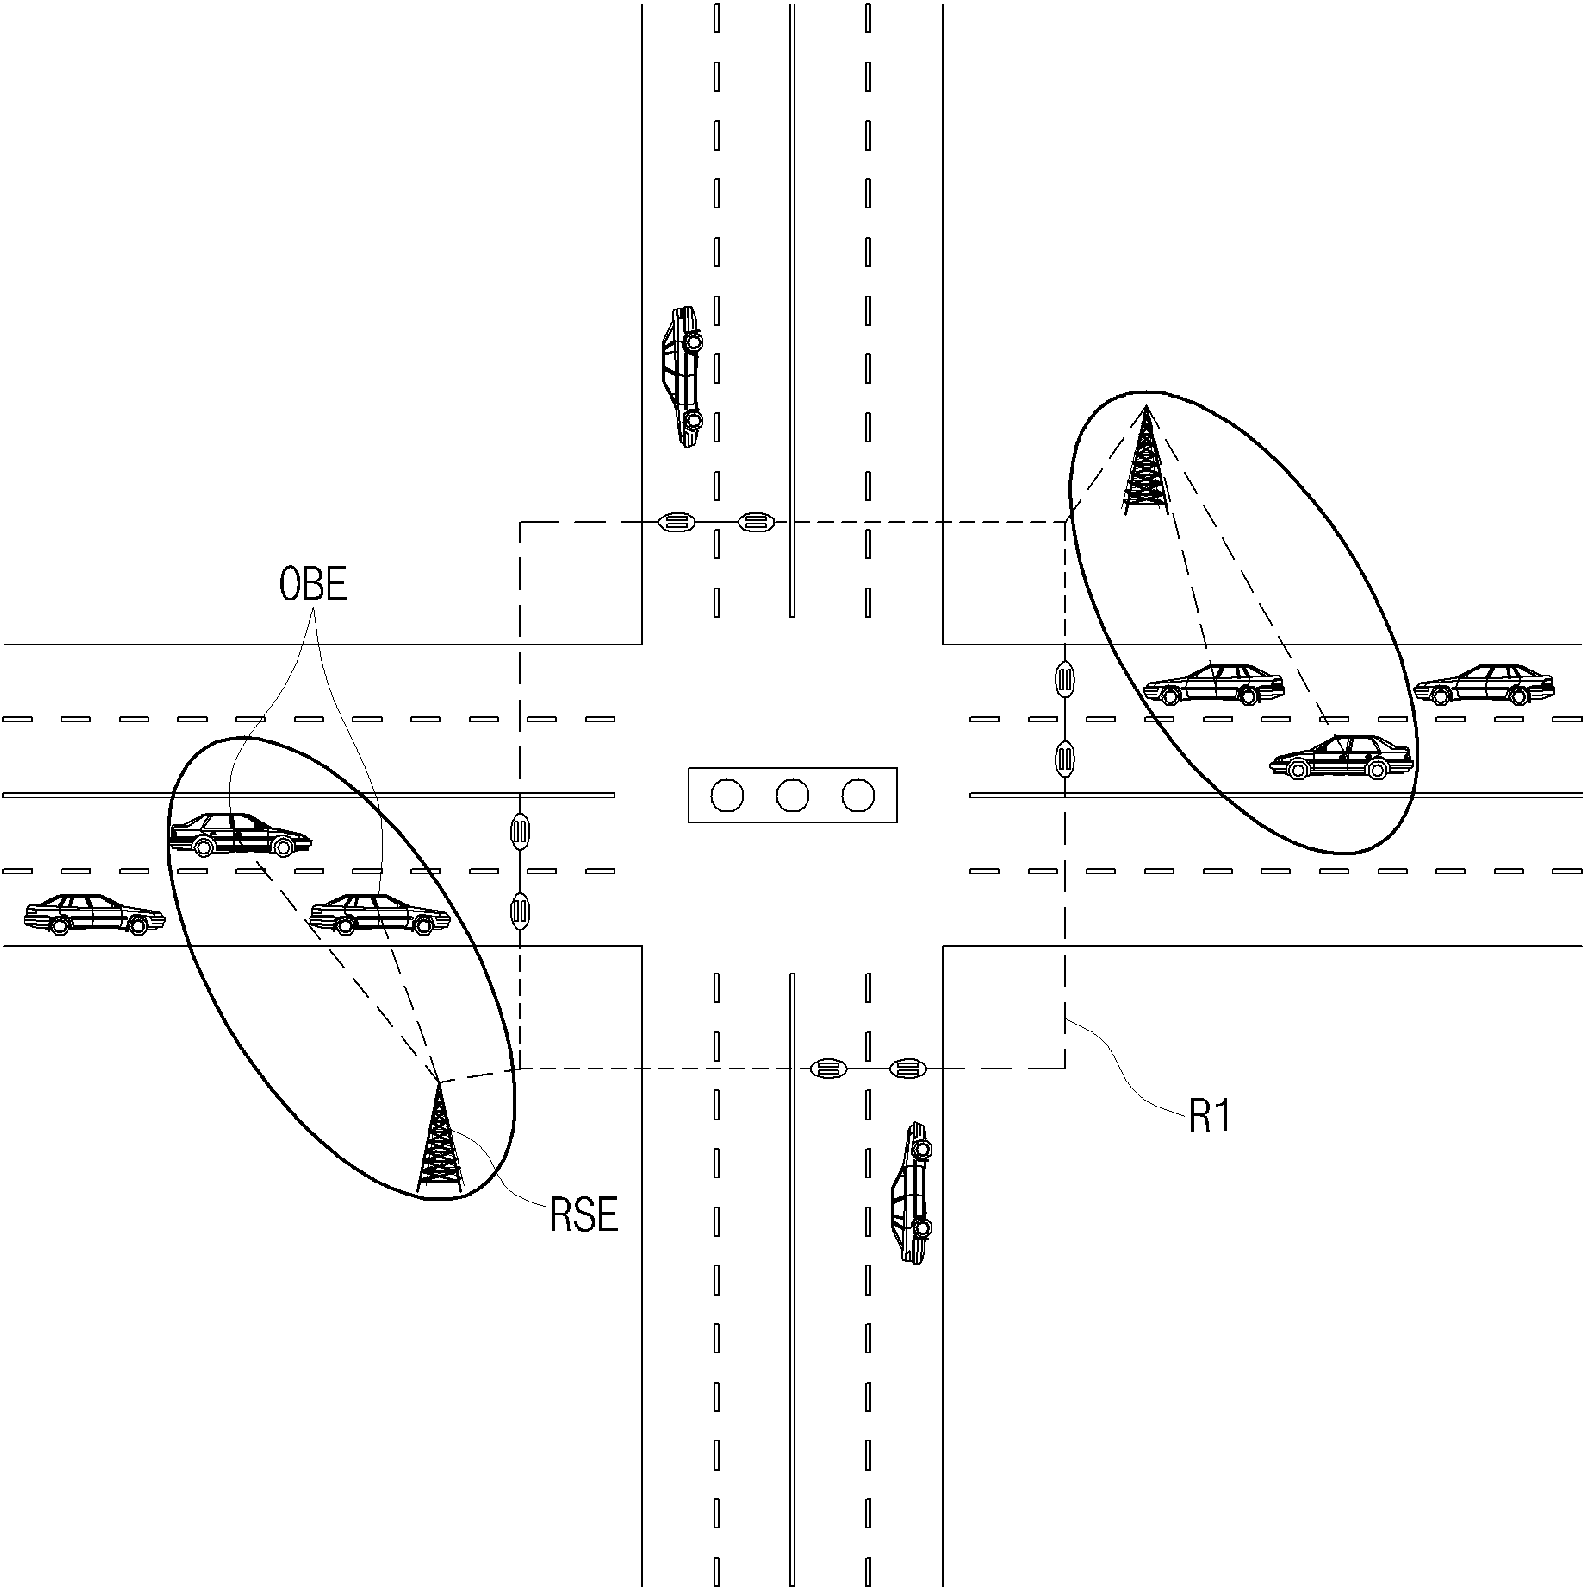 Automotive terminal and communication method based on the same